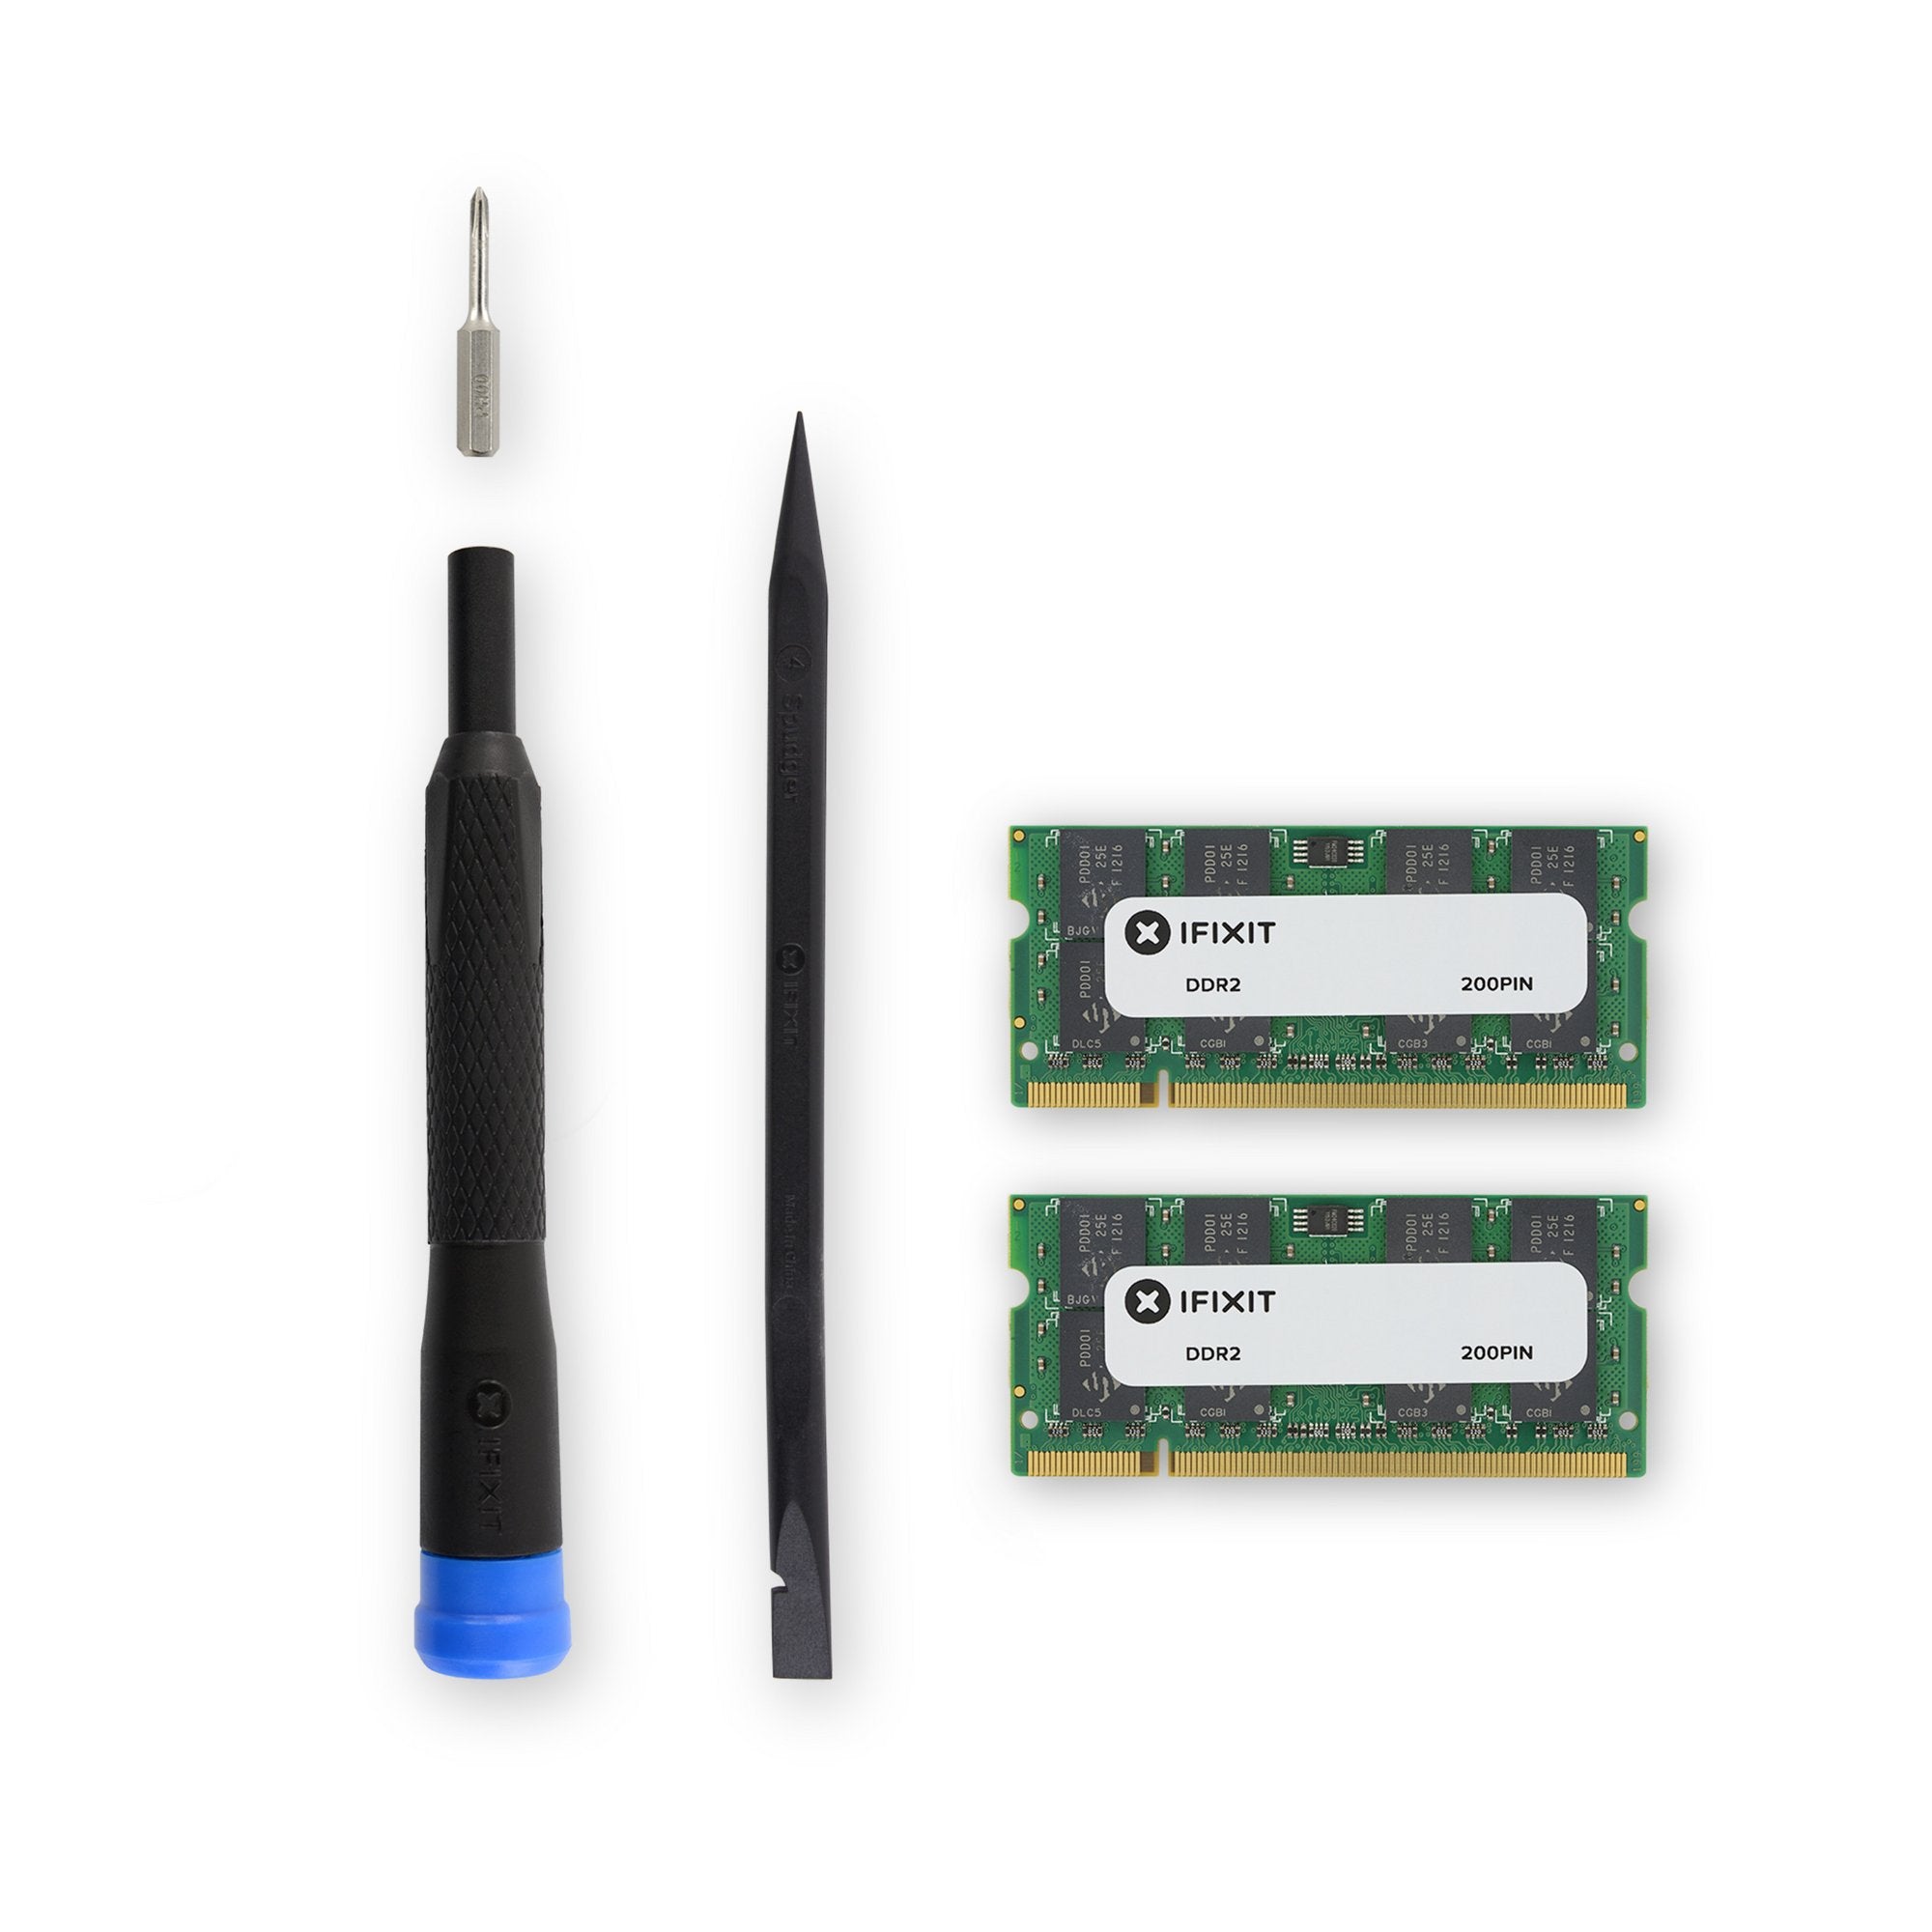 MacBook Pro 17" (Model A1261) Memory Maxxer RAM Upgrade Kit